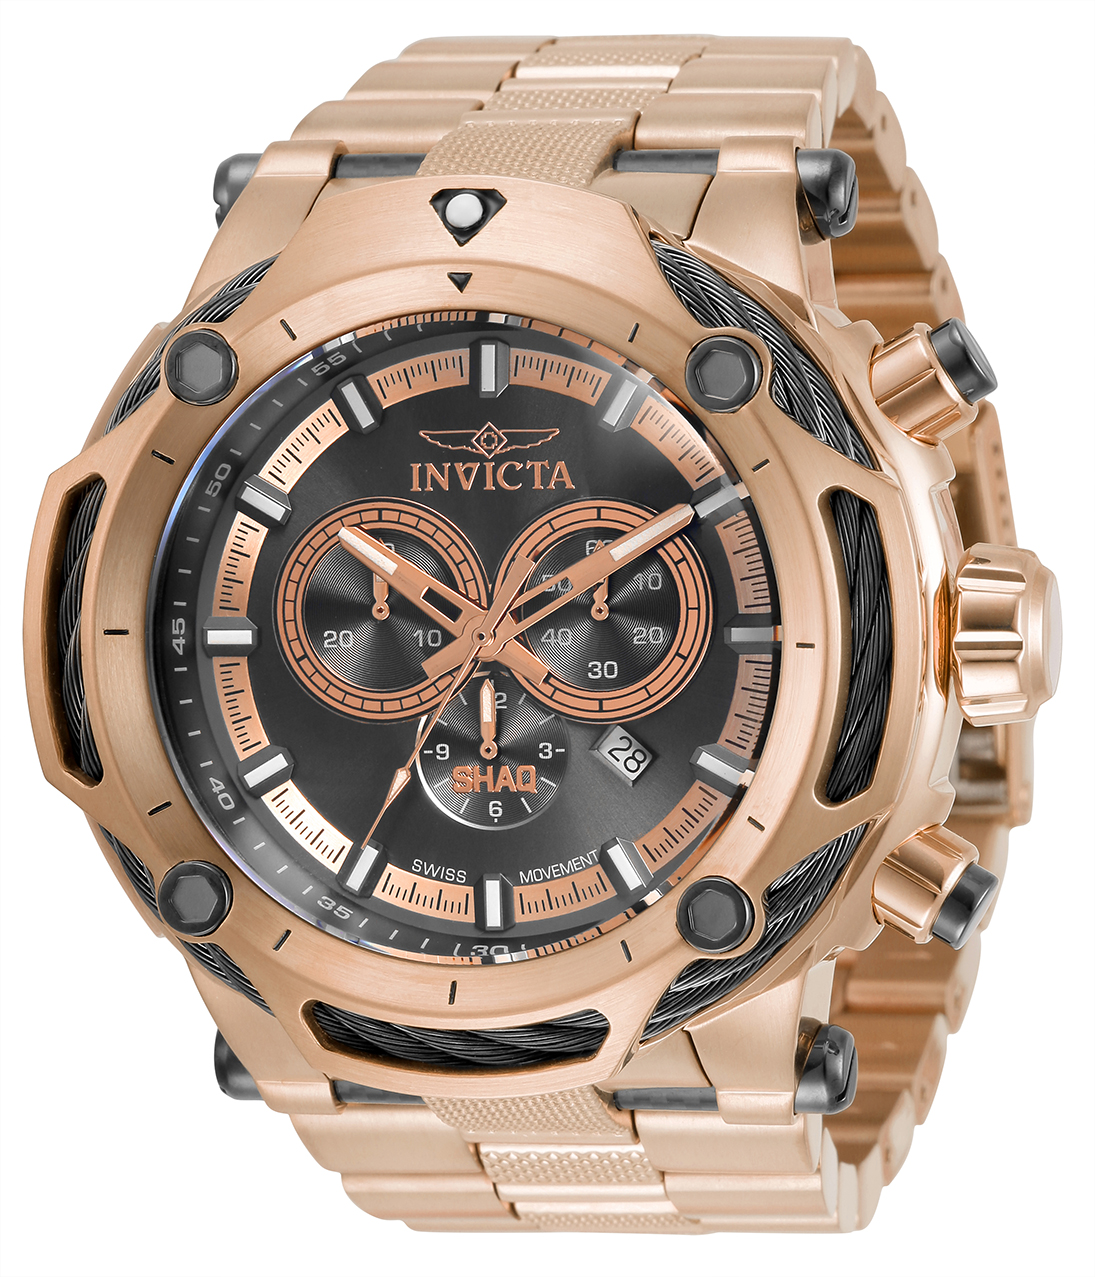 Invicta SHAQ Men's Watch - 60mm, Rose Gold, Black (33661)